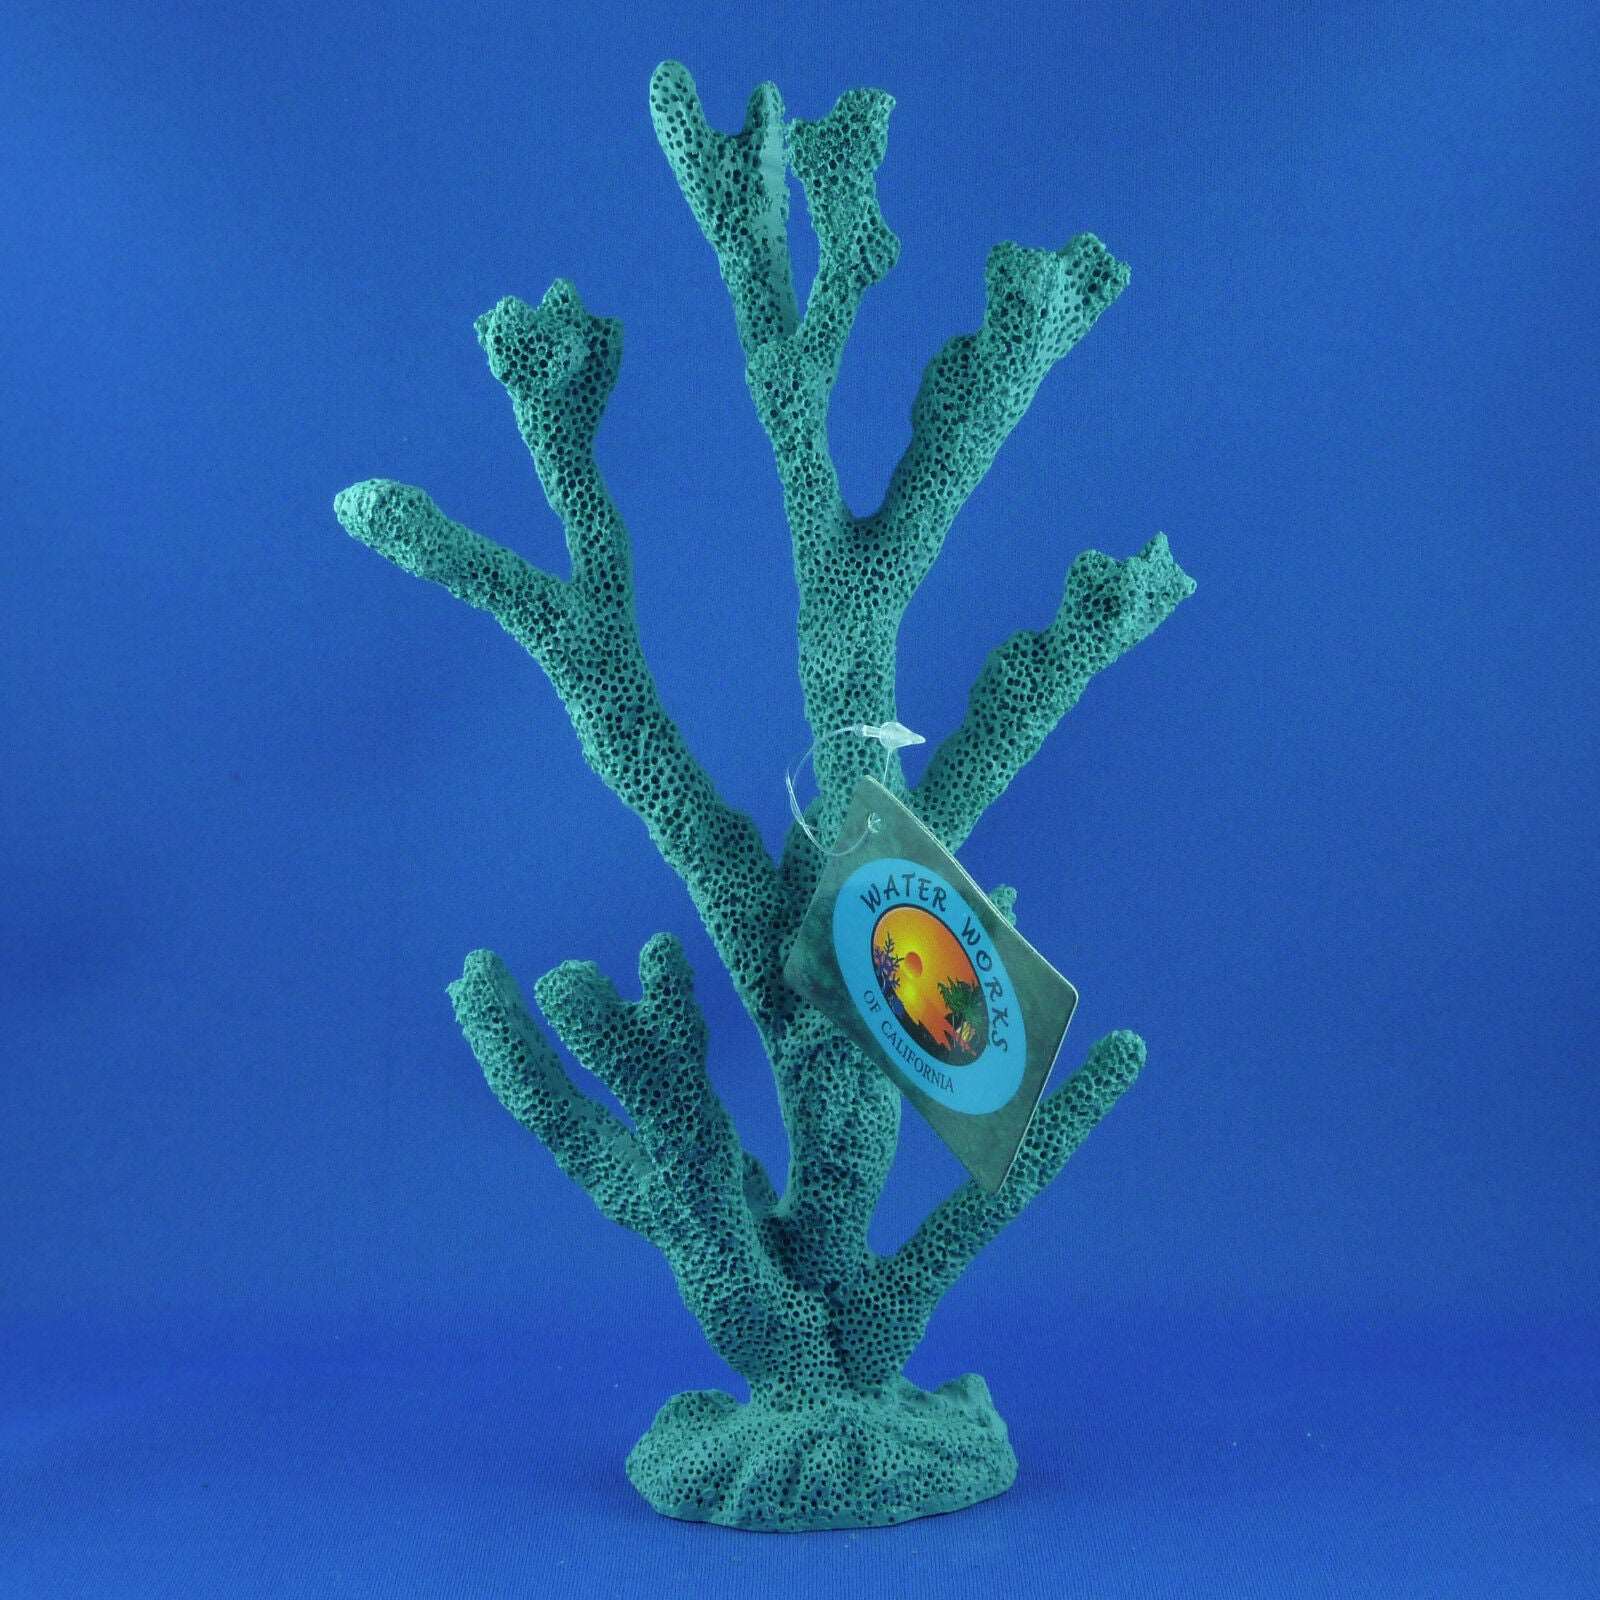 New Aquarium artificial medium coral tree in Aqua colour